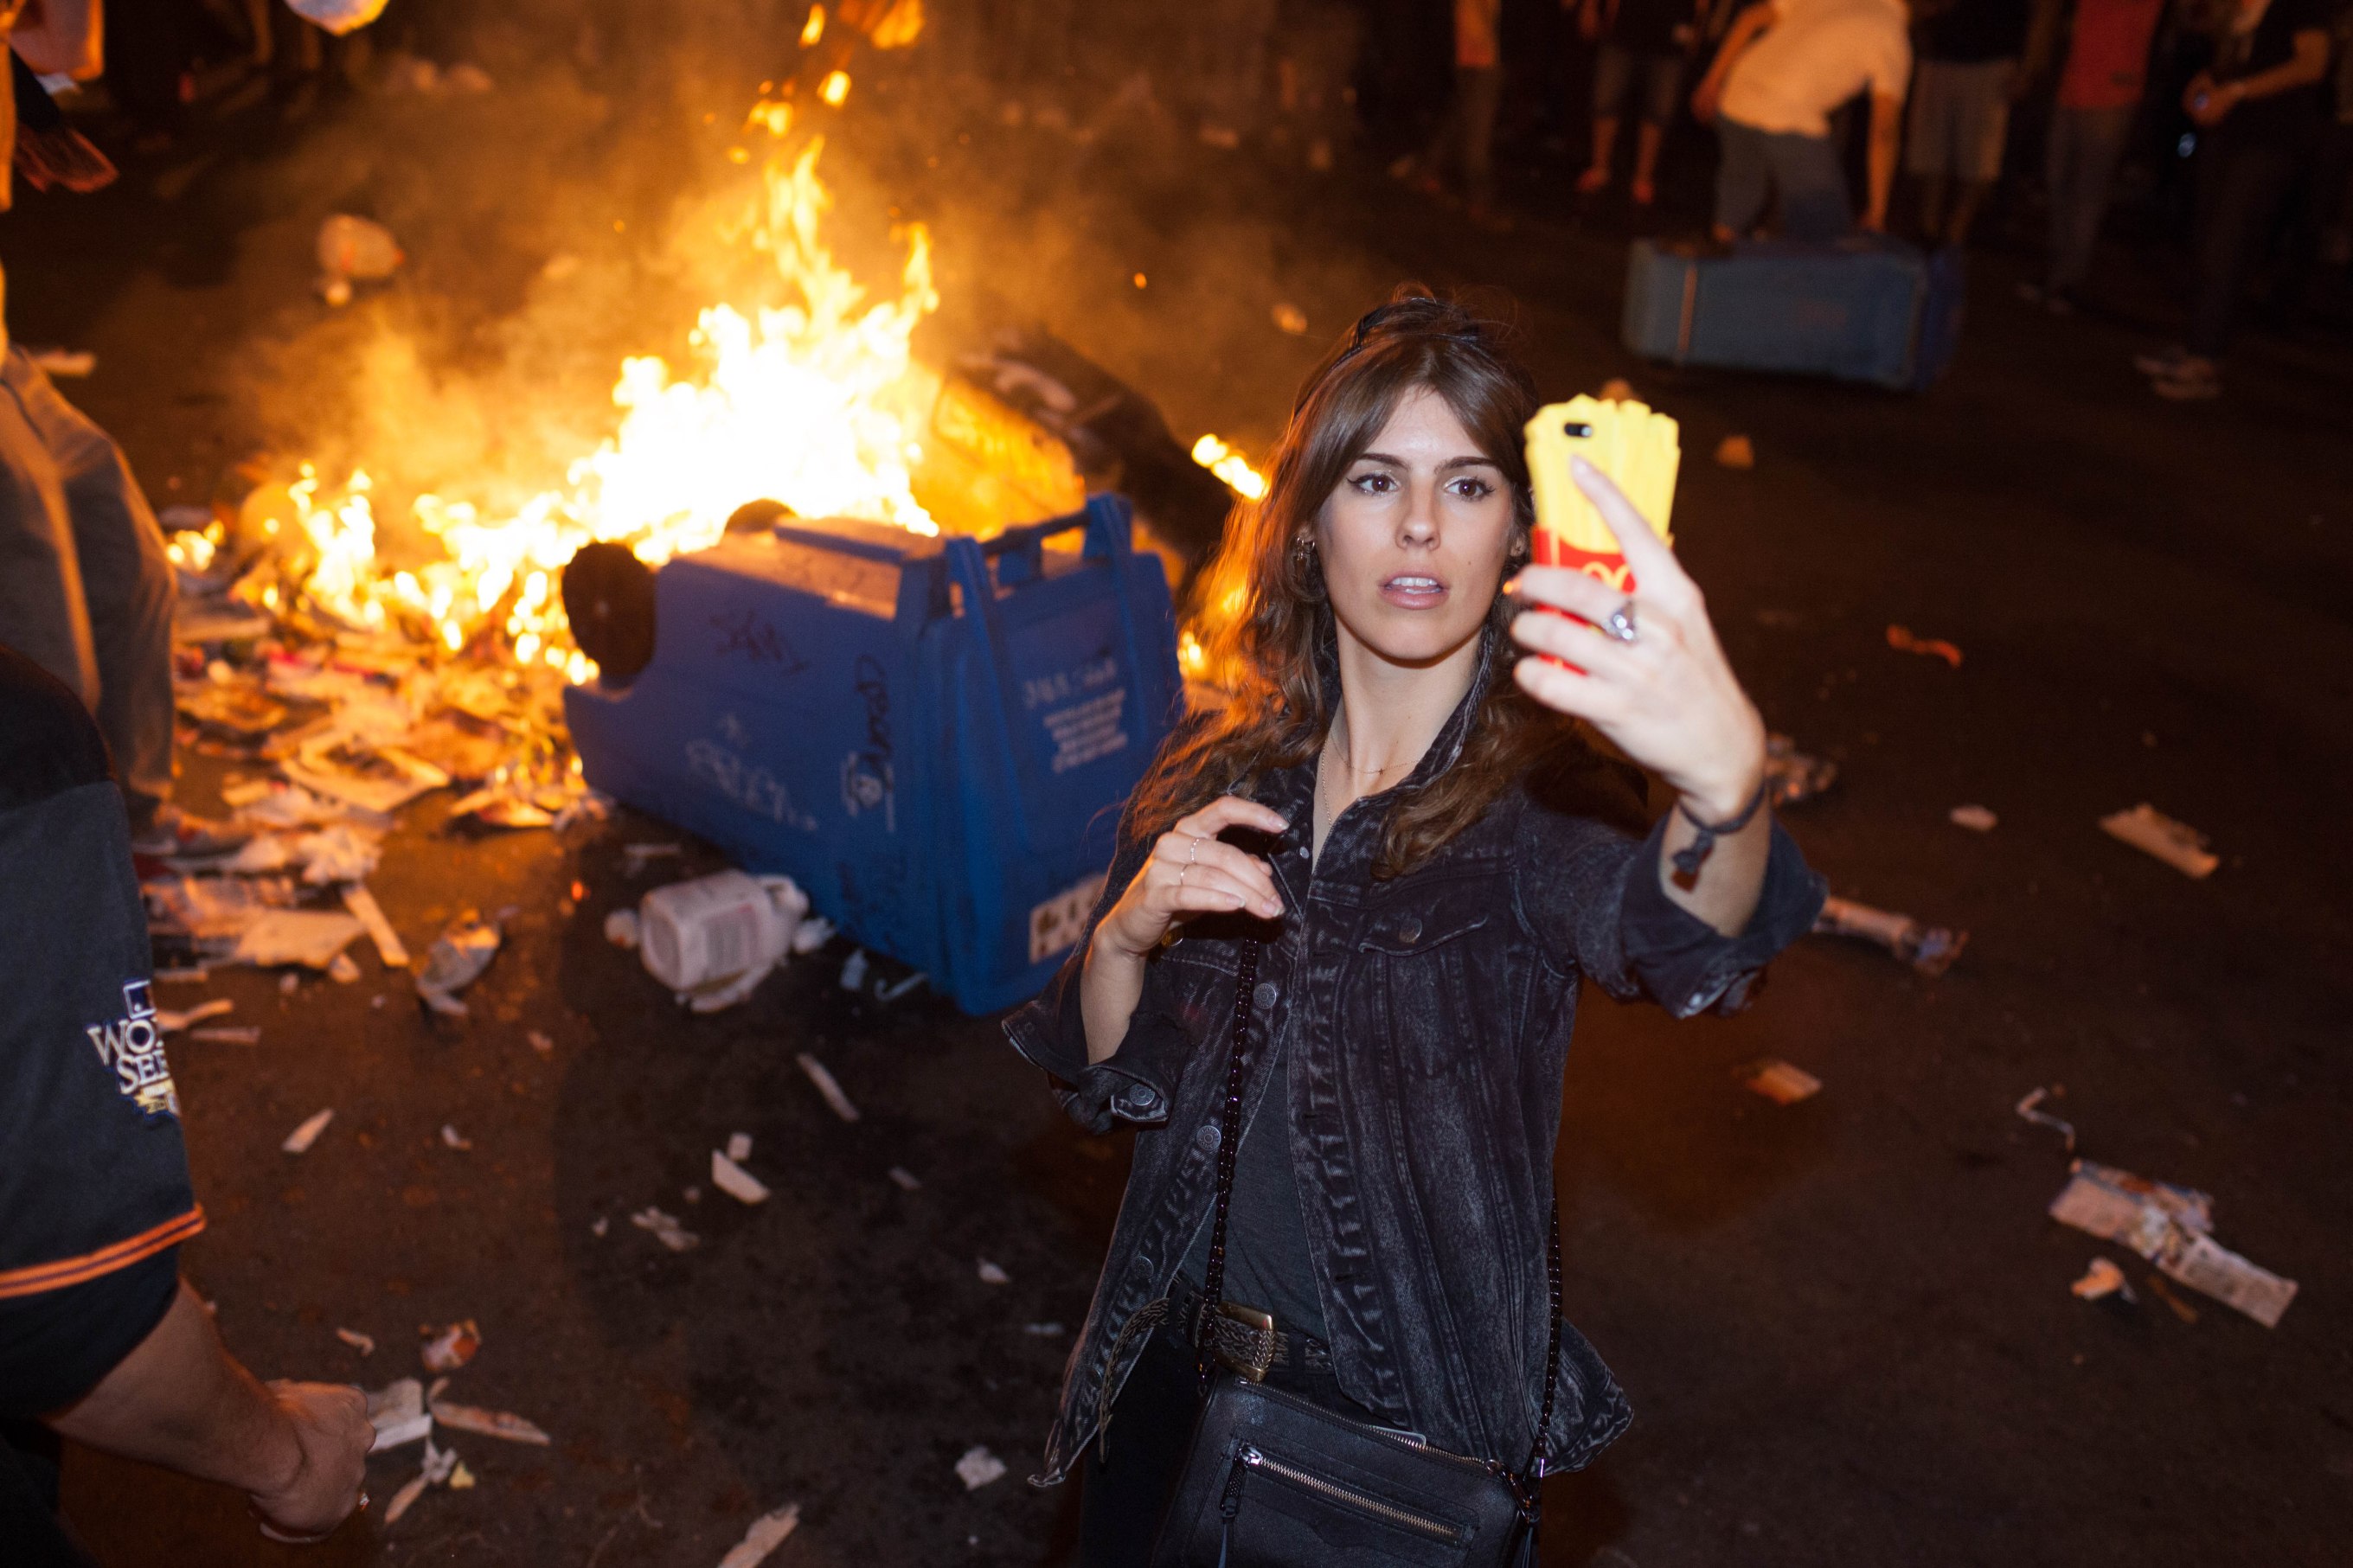 Woman_taking_bonfire_selfie_-_San_Francisco_Giants_World_Series_2014_celebration